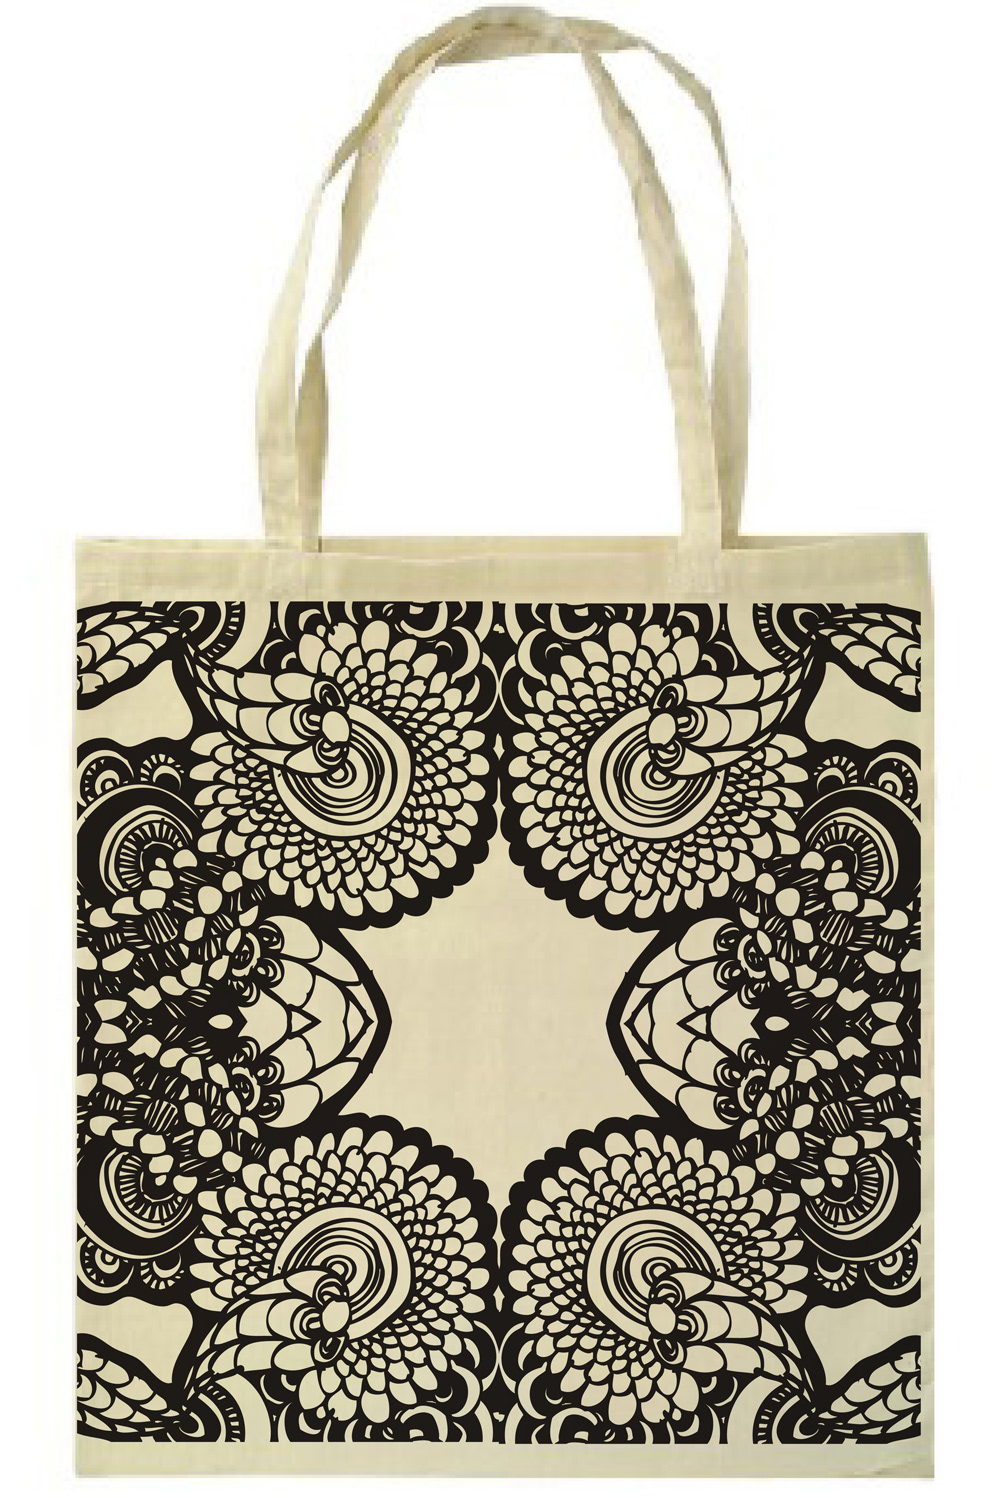 screen printing pattern textile canvas bag